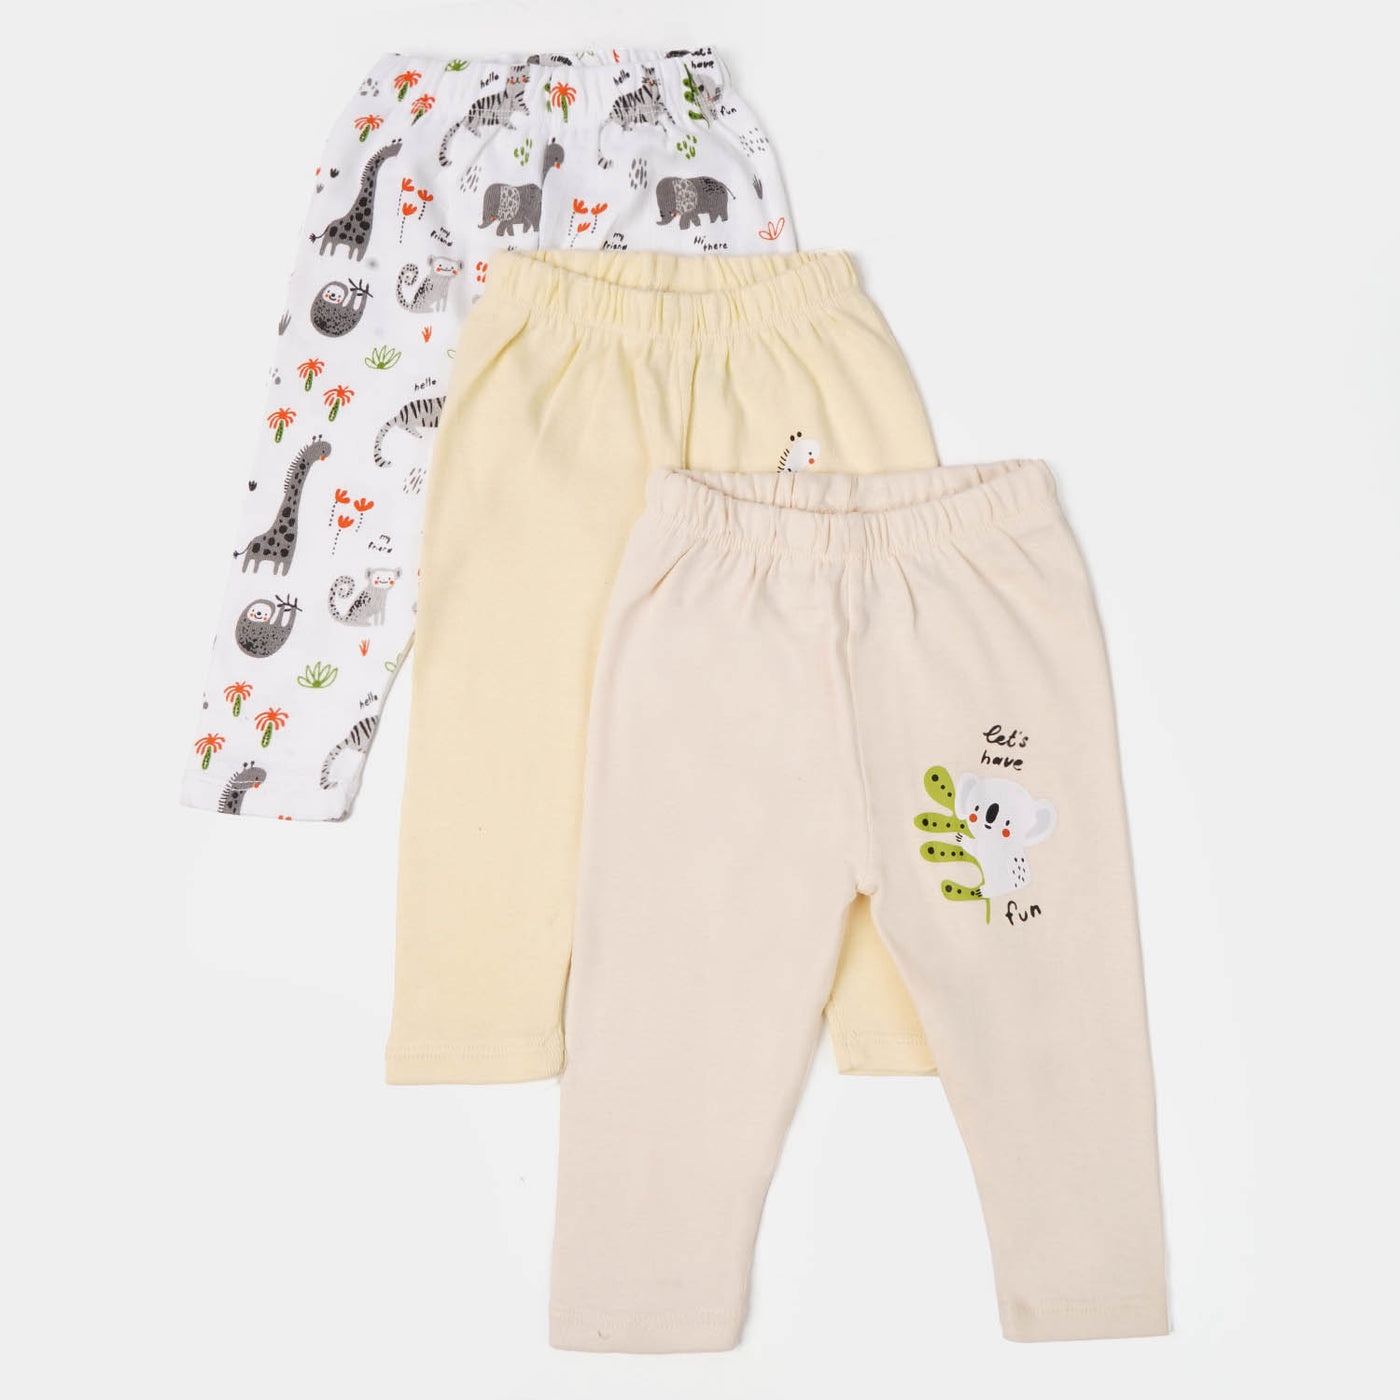 Infant Boys Pajama 3 PCs Set Wild Animal - Multi